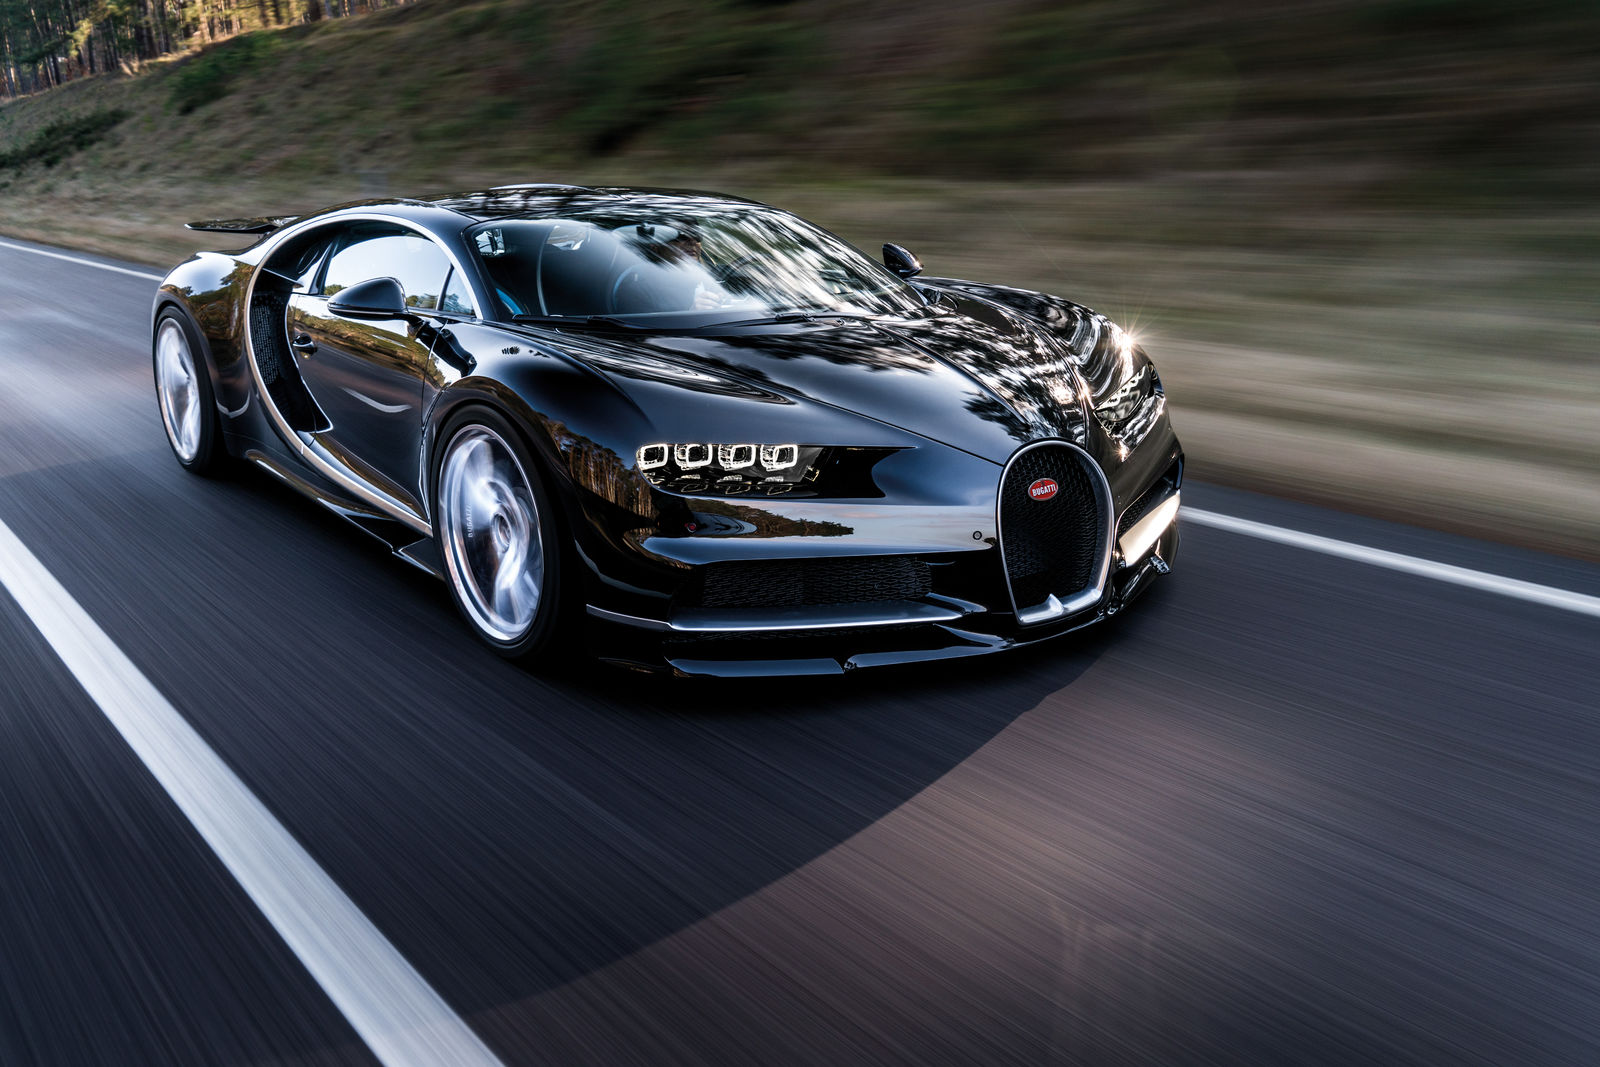 A black Bugatti Chiron supercar travels on a highway